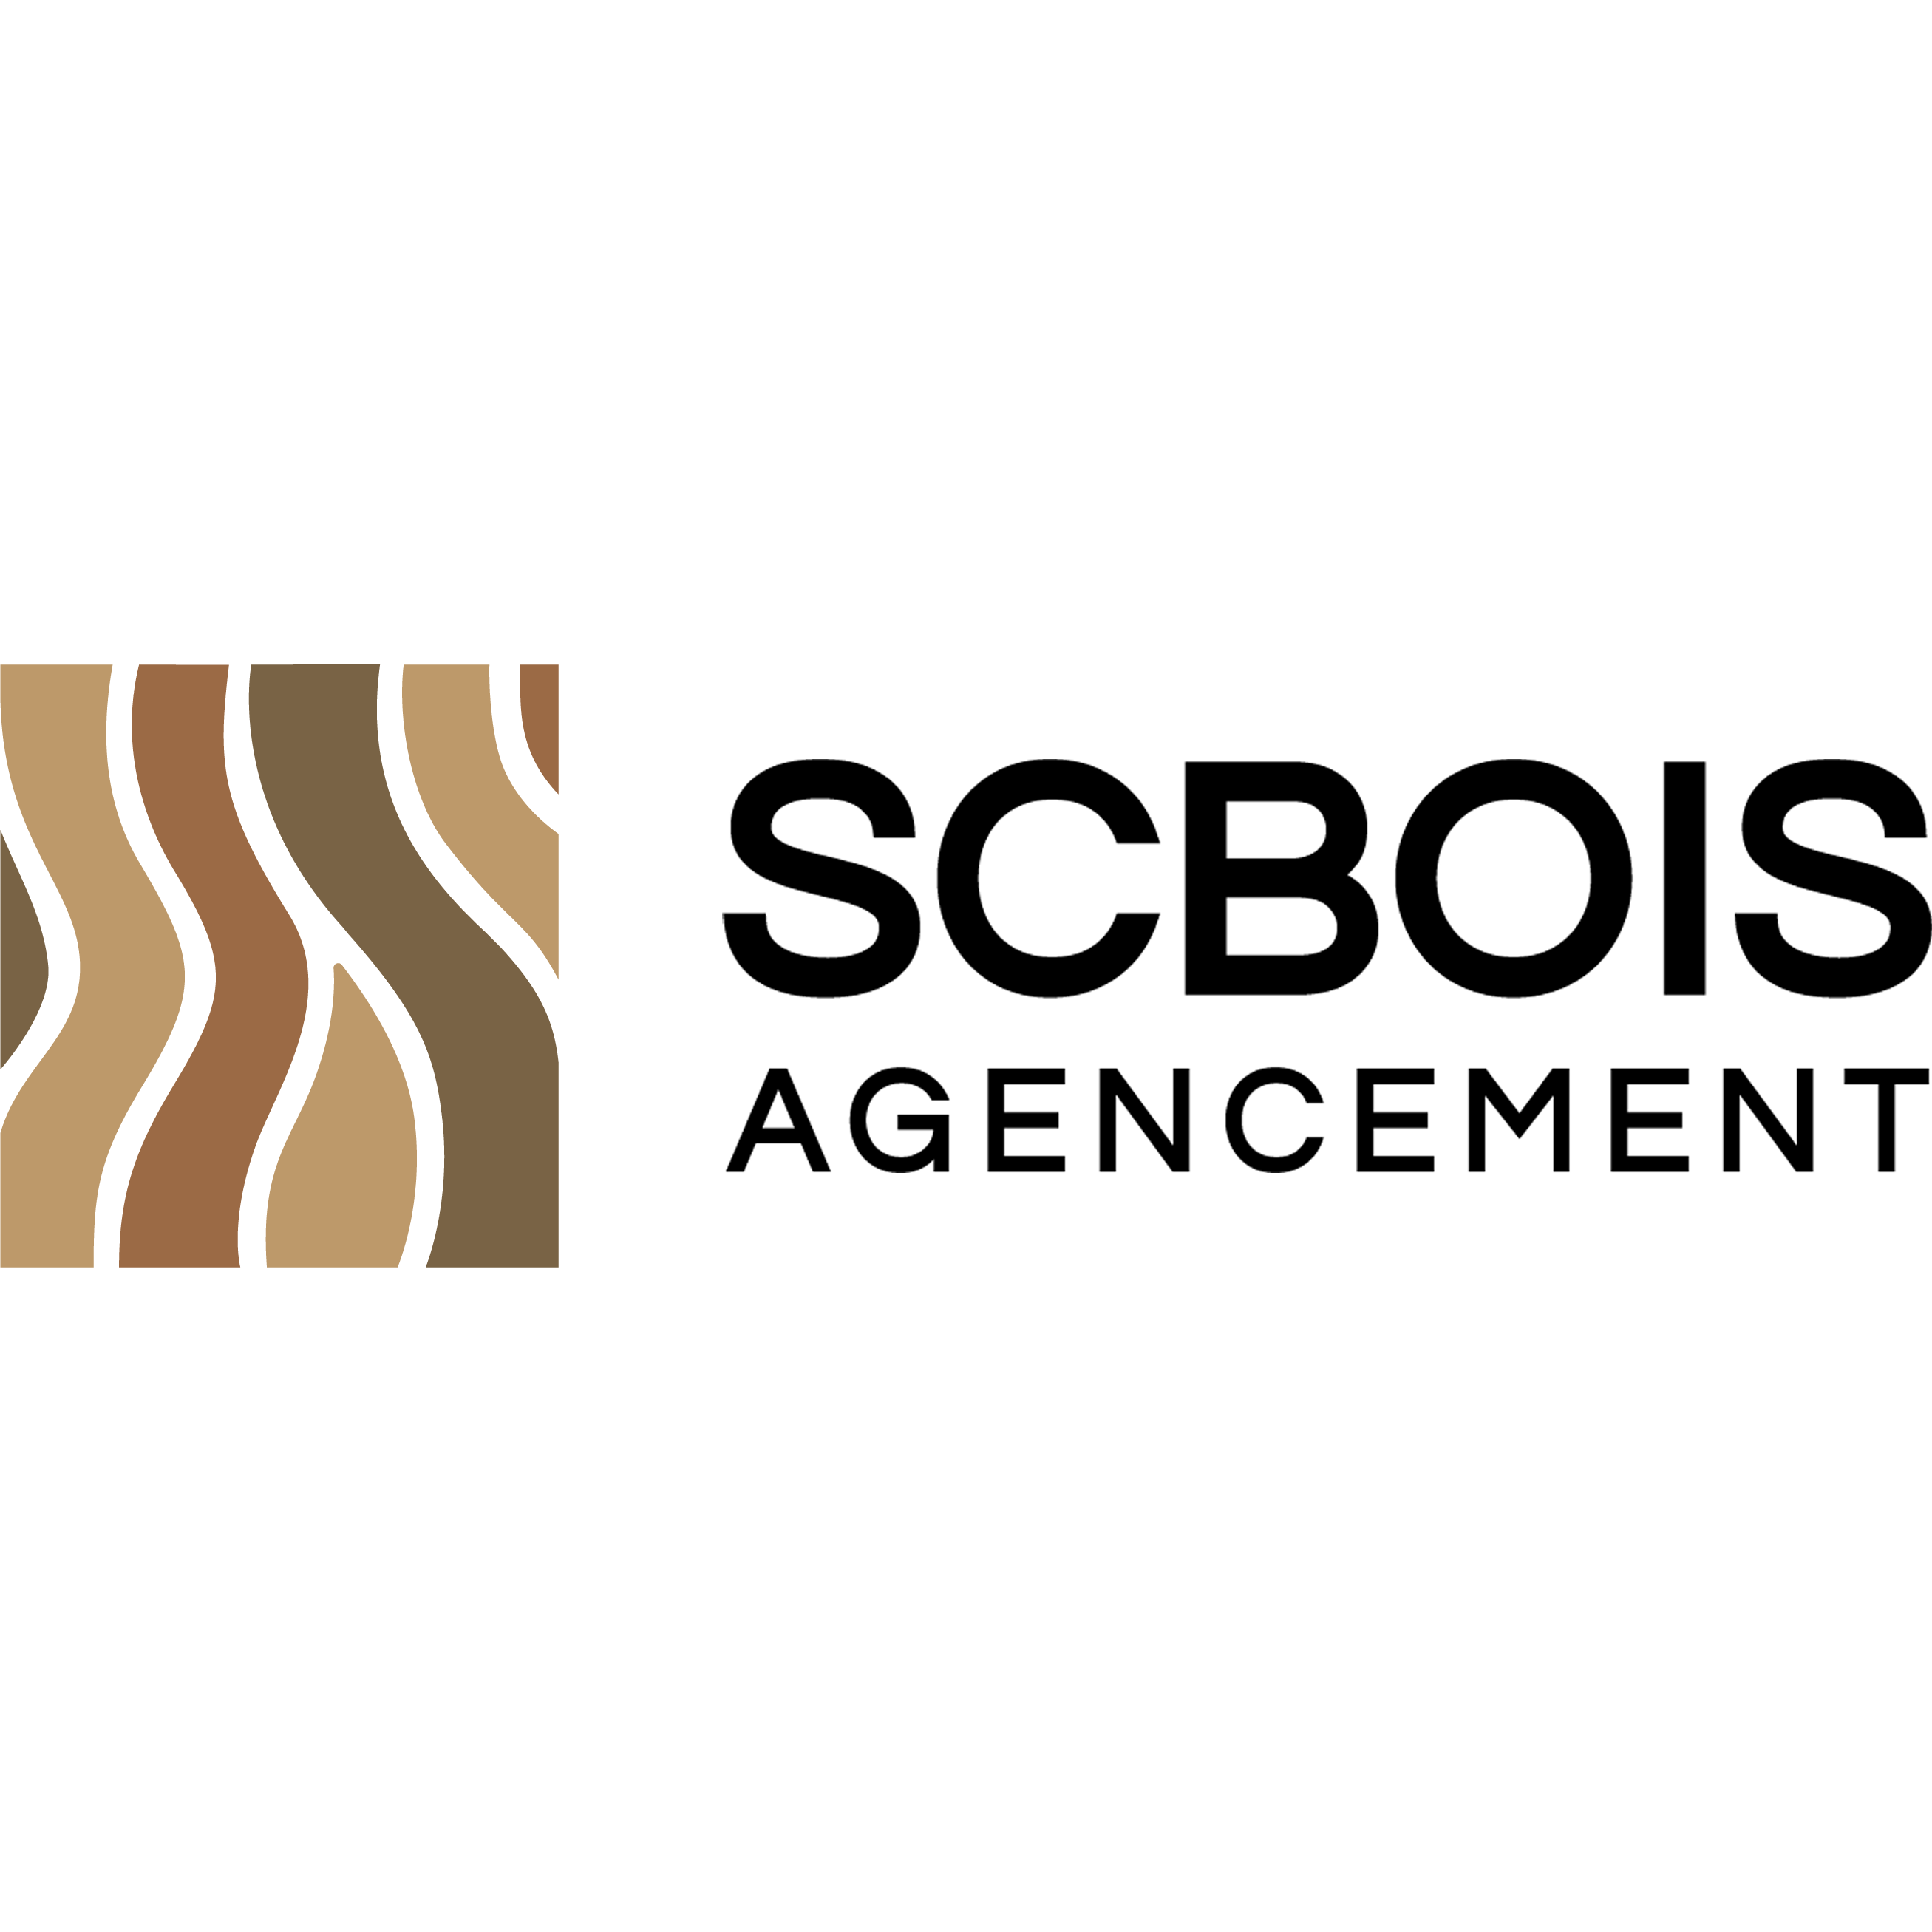 SCBois Agencement Logo